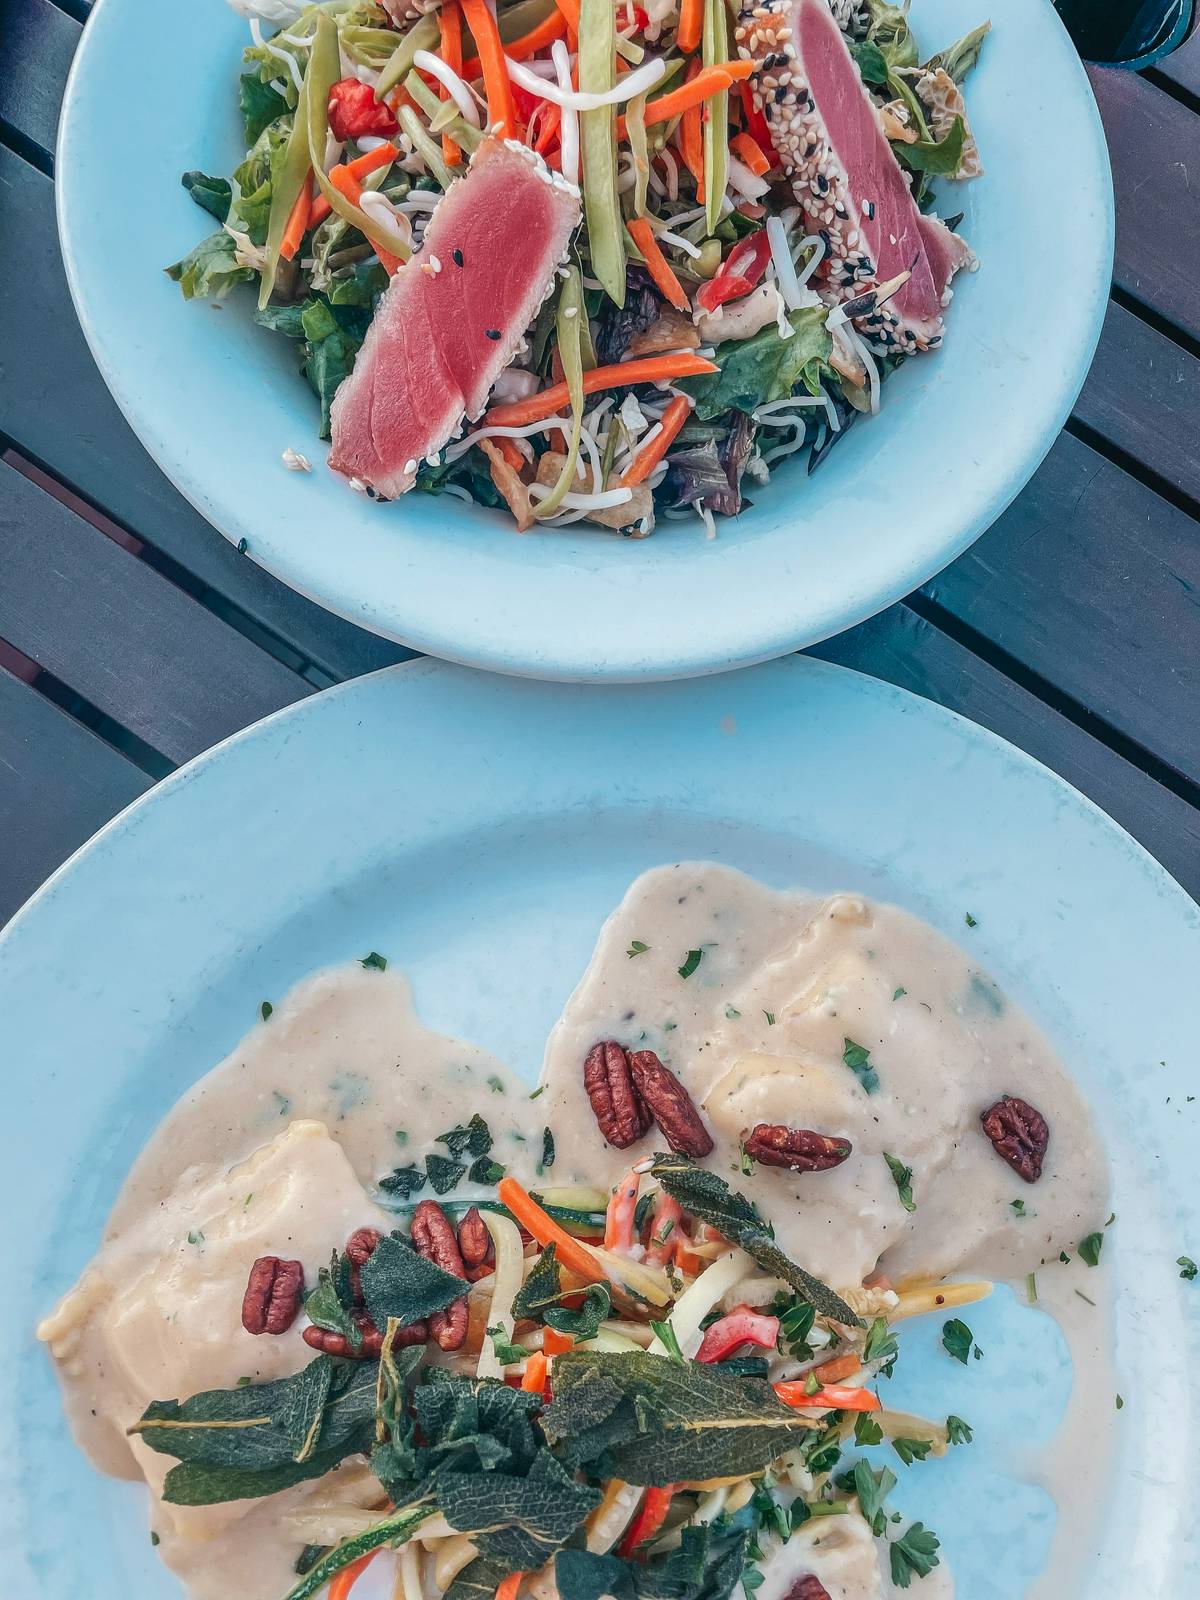 Butternut squash ravioli and tuna salad at The Hudson restaurant in Sedona